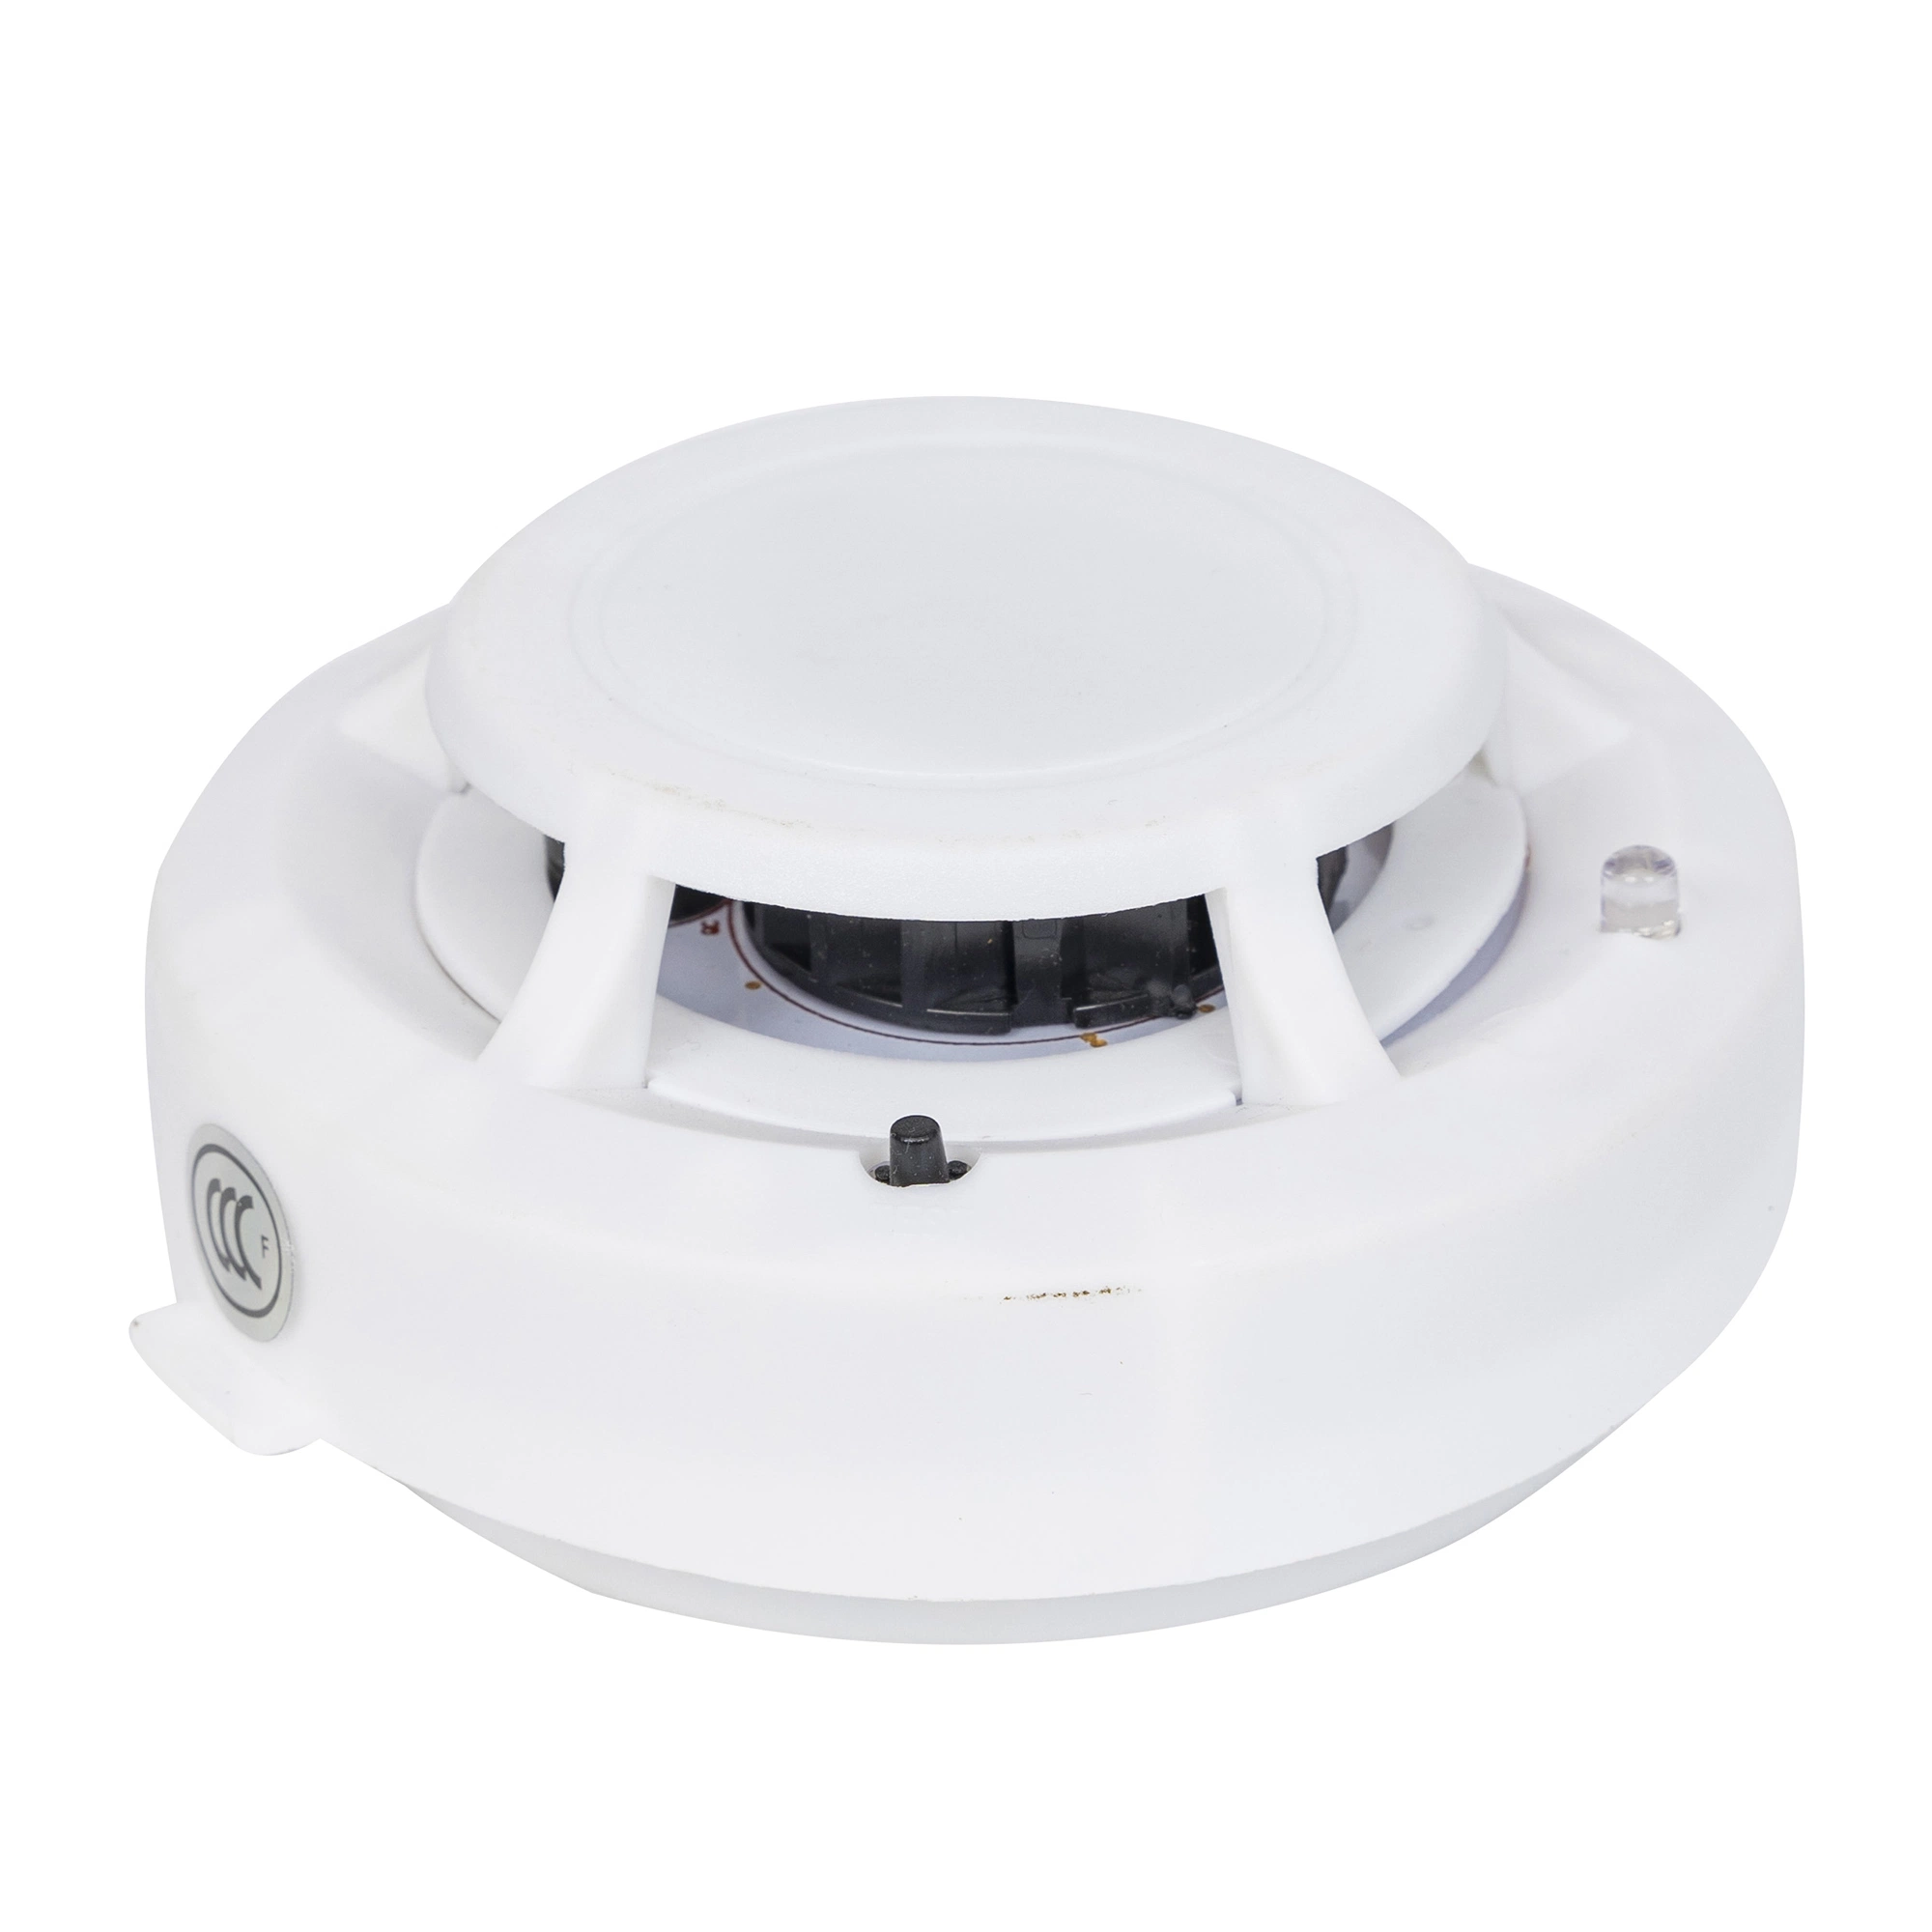 Sanxing Smoke Alarm Sensor for Home Office Security Photoelectric Smoke Alarm